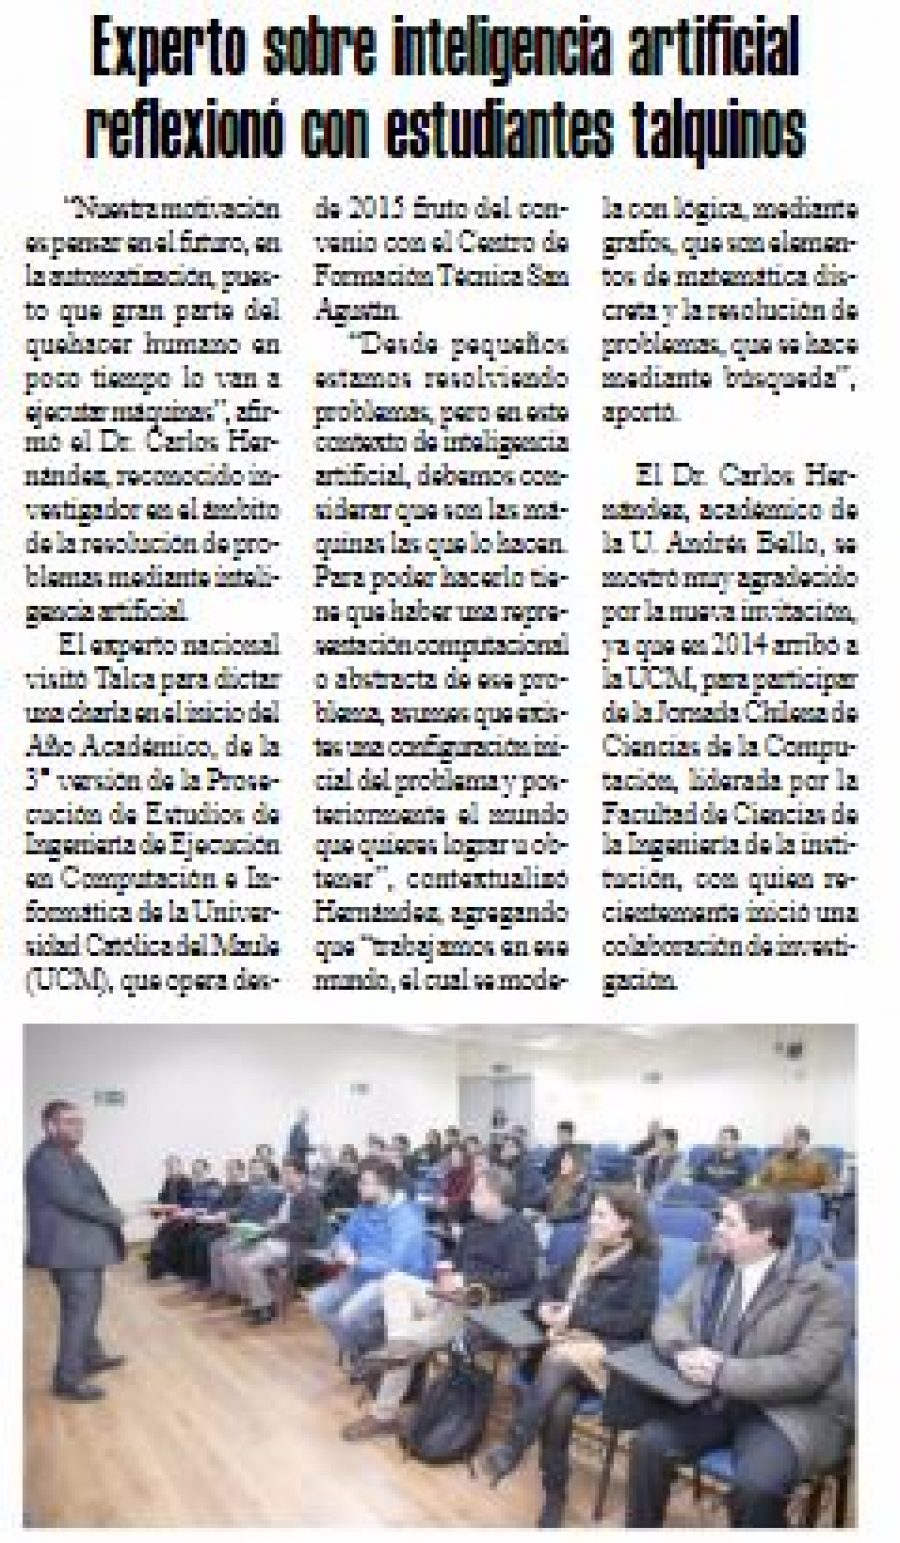 25 de agosto en Diario El Heraldo: “Experto en inteligencia artificial reflexionó con estudiantes talquinos”